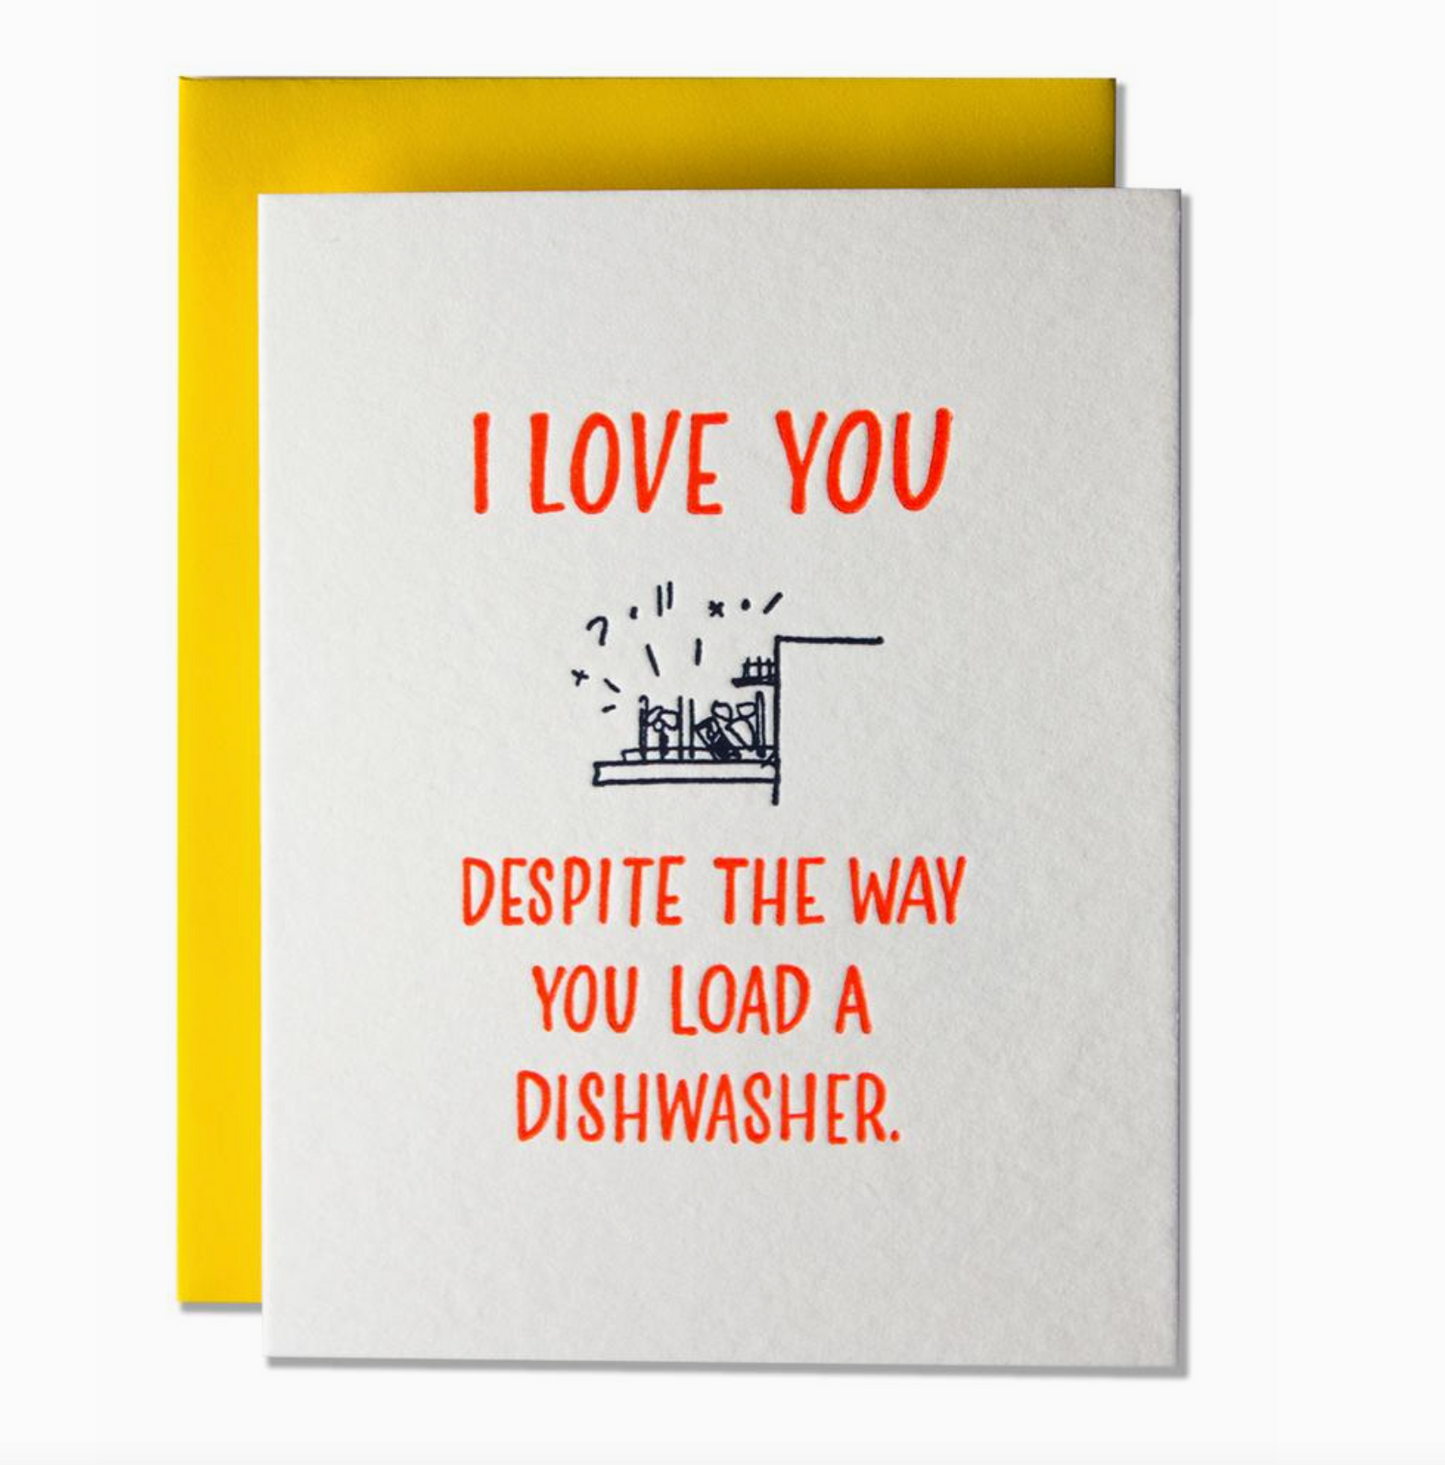 I Love You Despite The Way You Load A Dishwasher Card